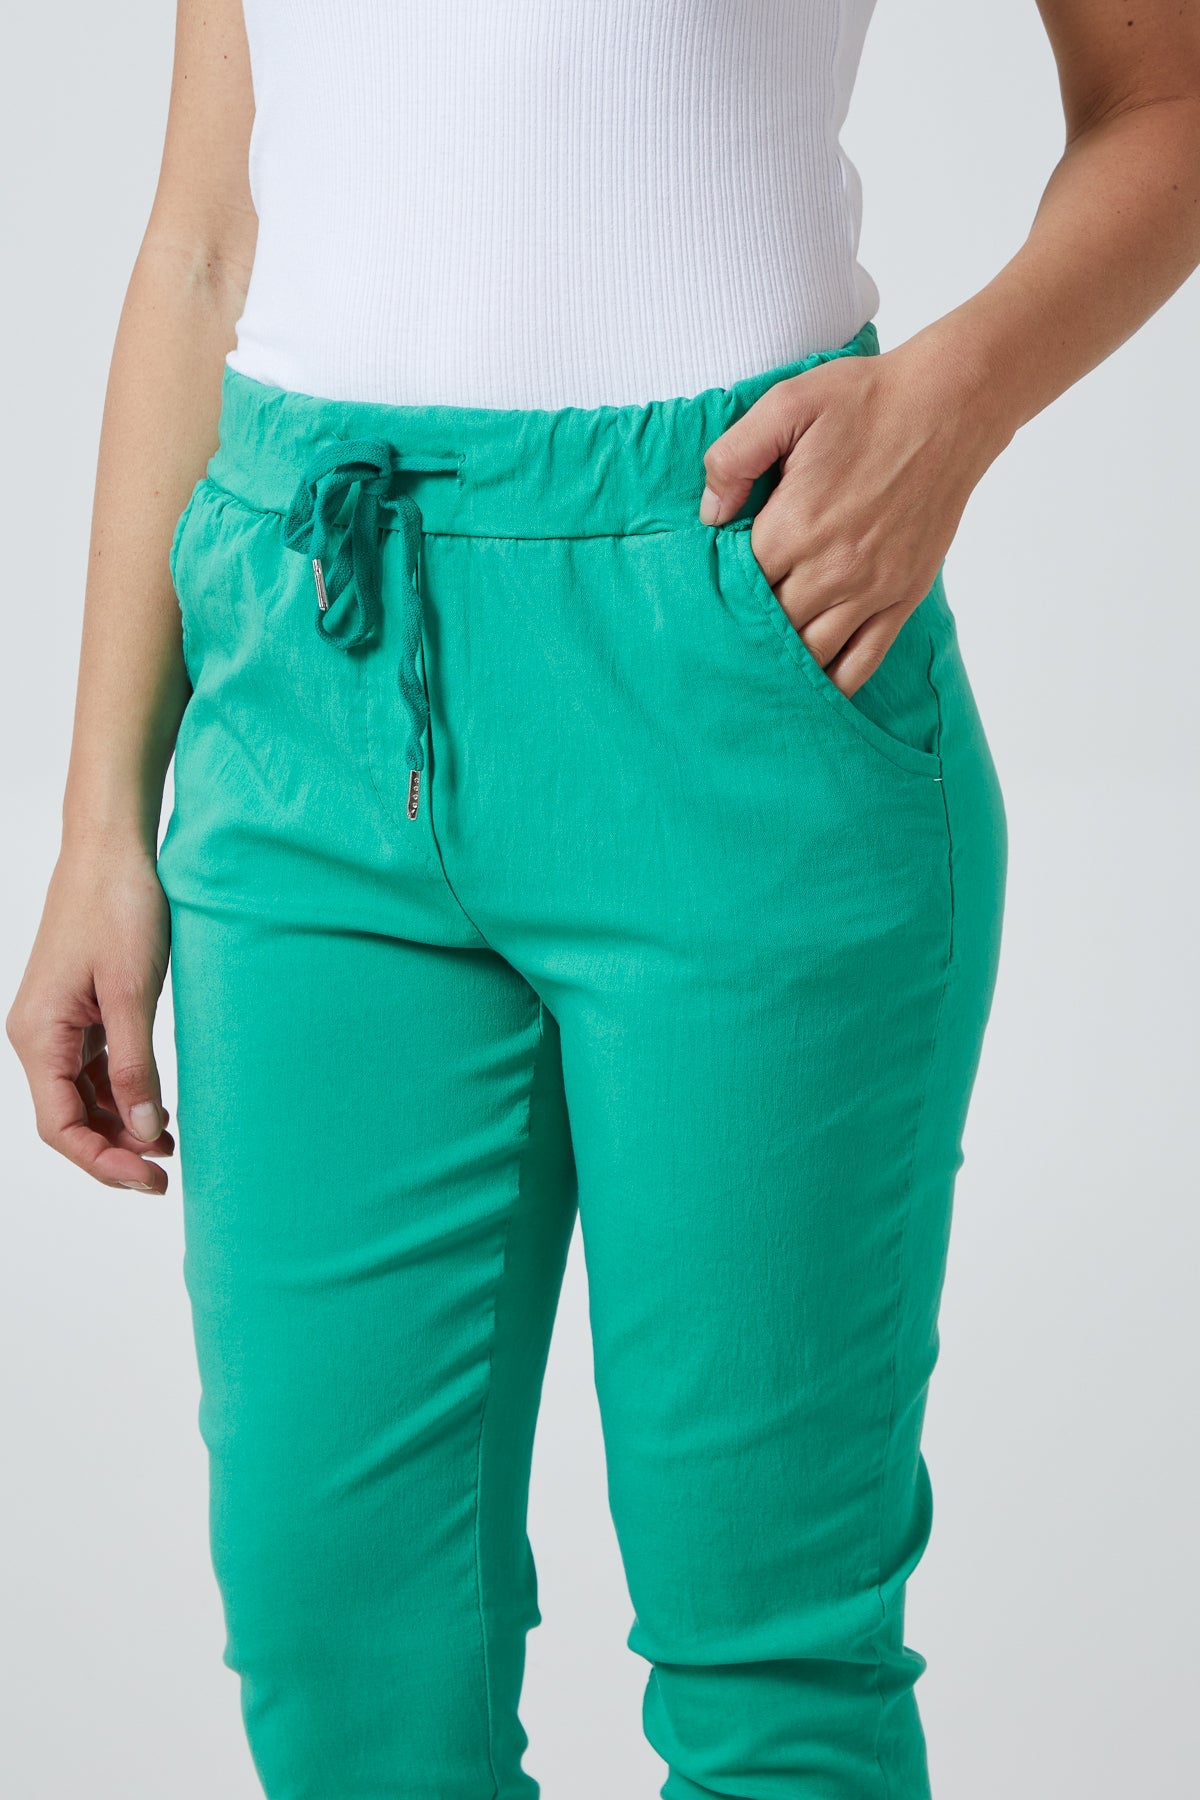 Fizz Plus Size Plain Magic Pants - Green